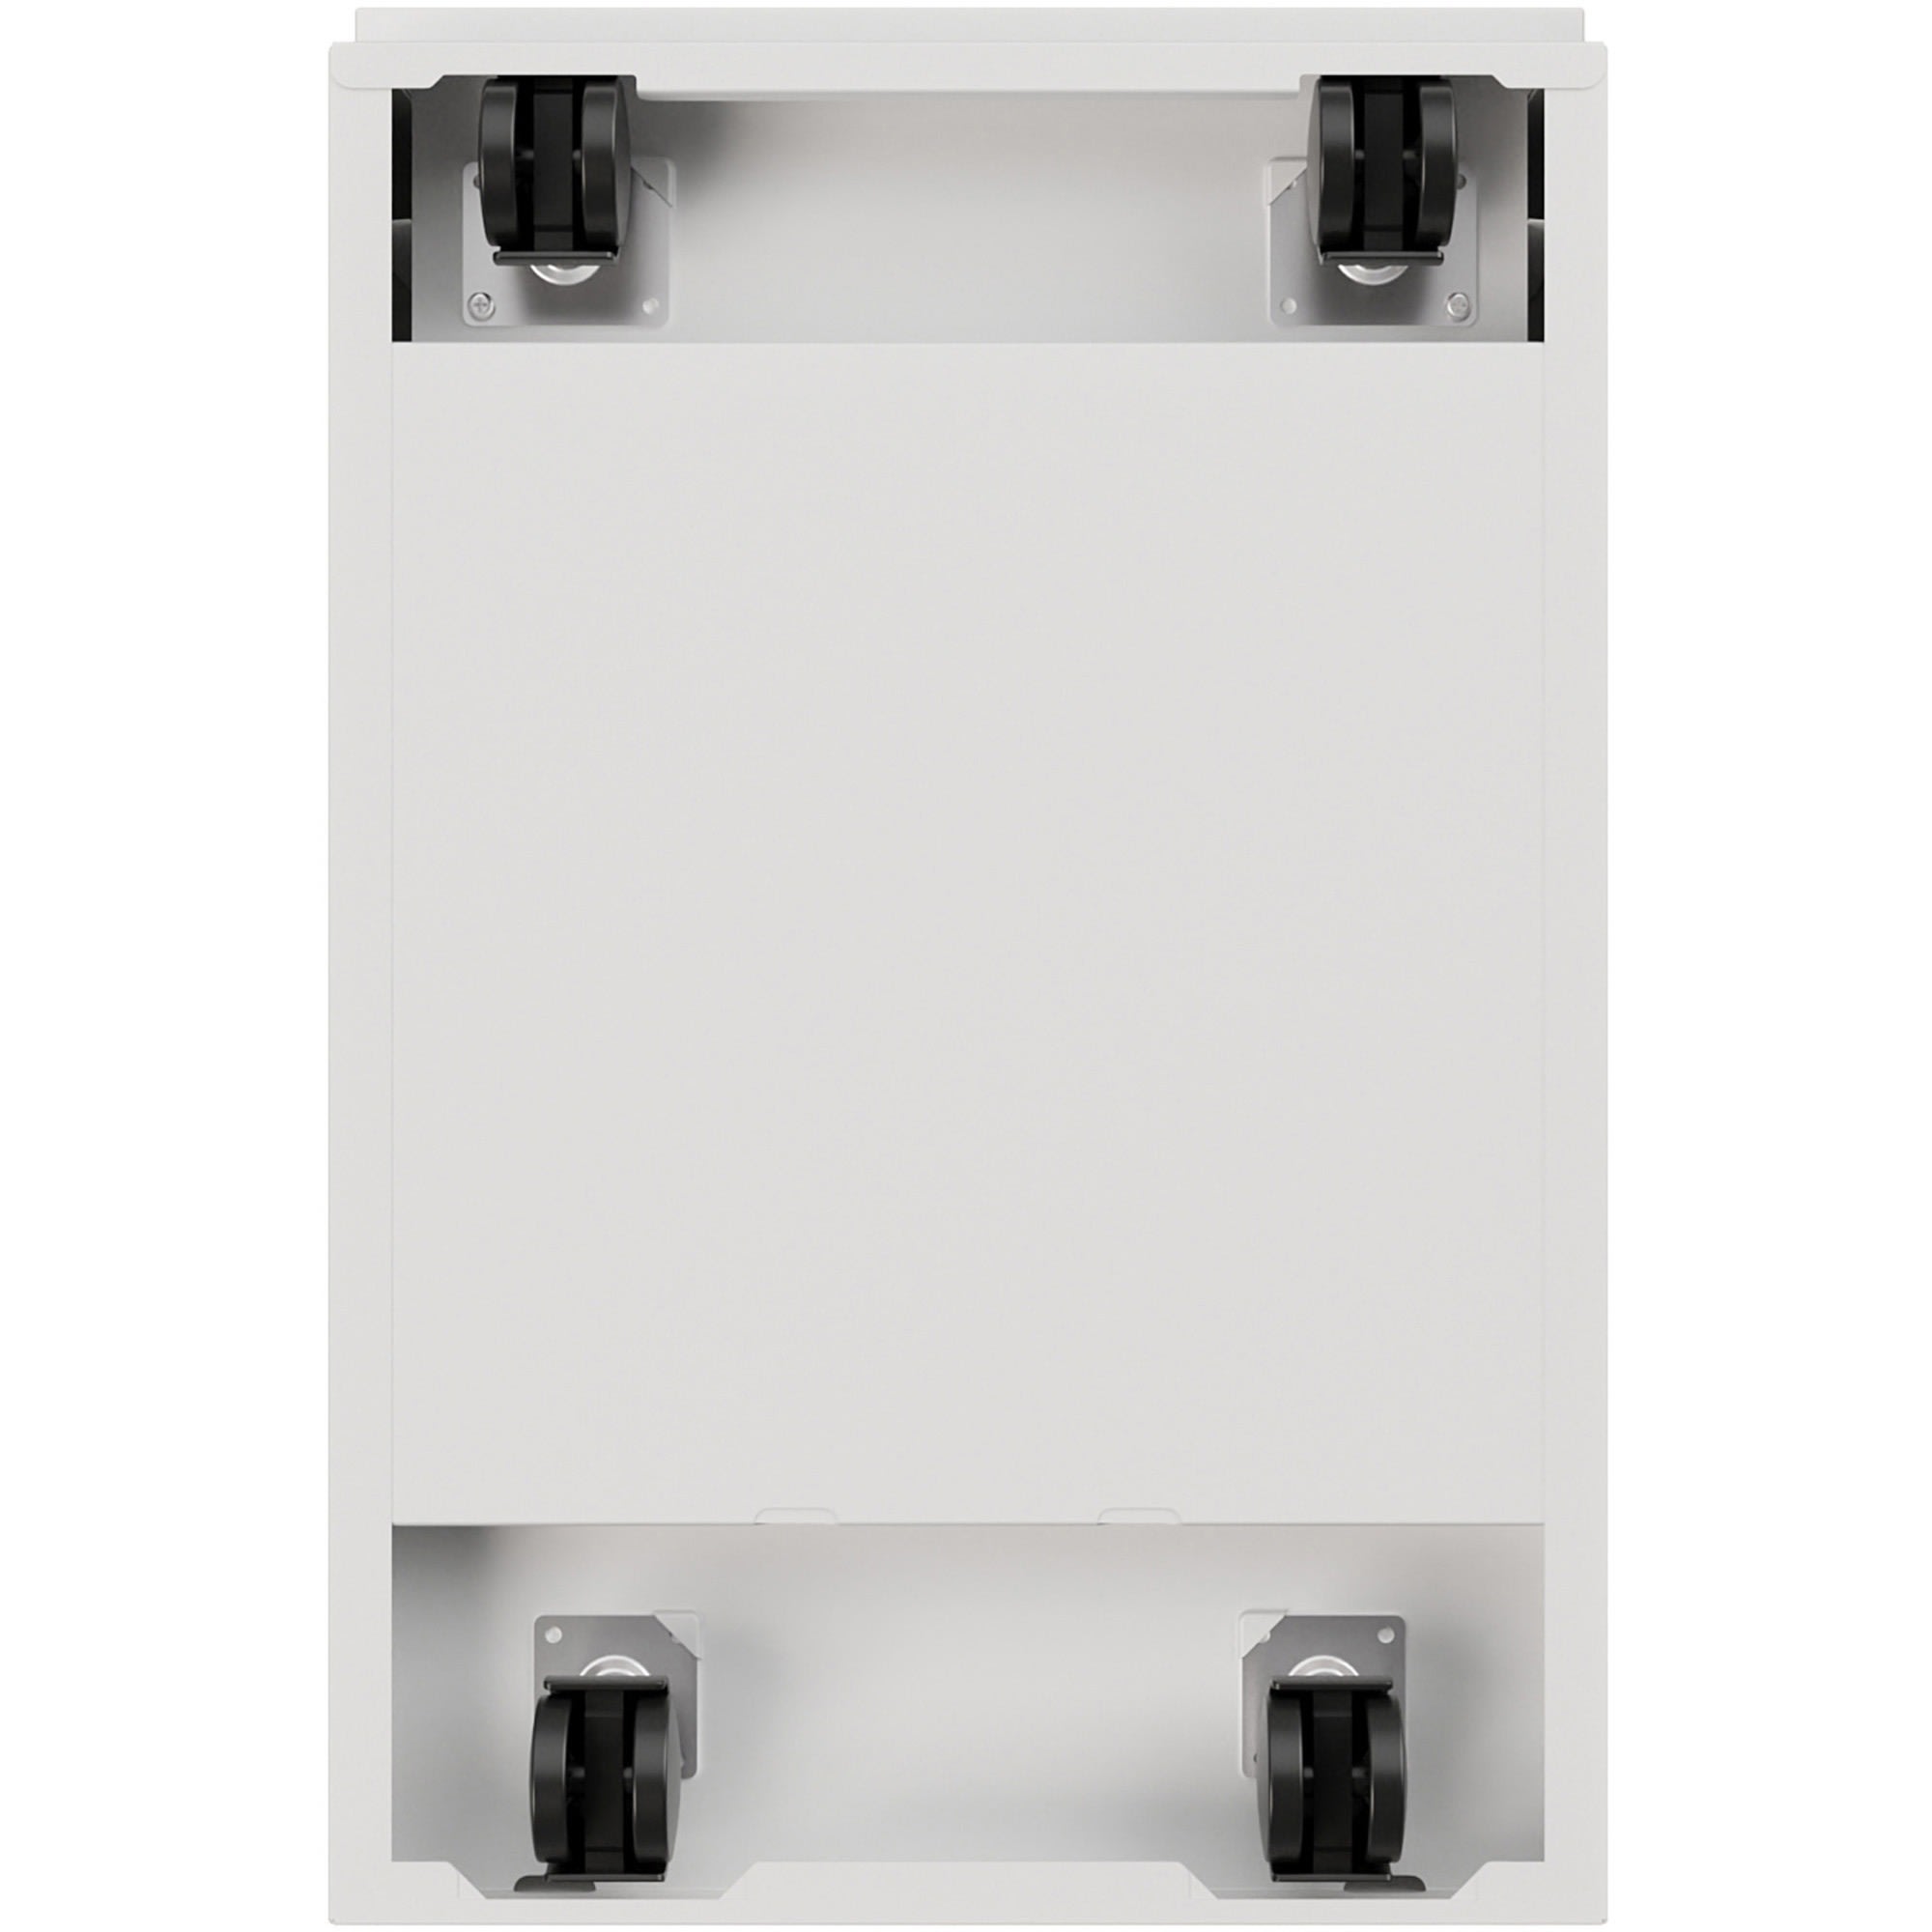 Lorell Mobile Pedestal File 2 Drawer 15" x 19.9" x 23.8" - 2 x Drawer(s) Box 305.50 lb Load Capacity - image 5 of 5